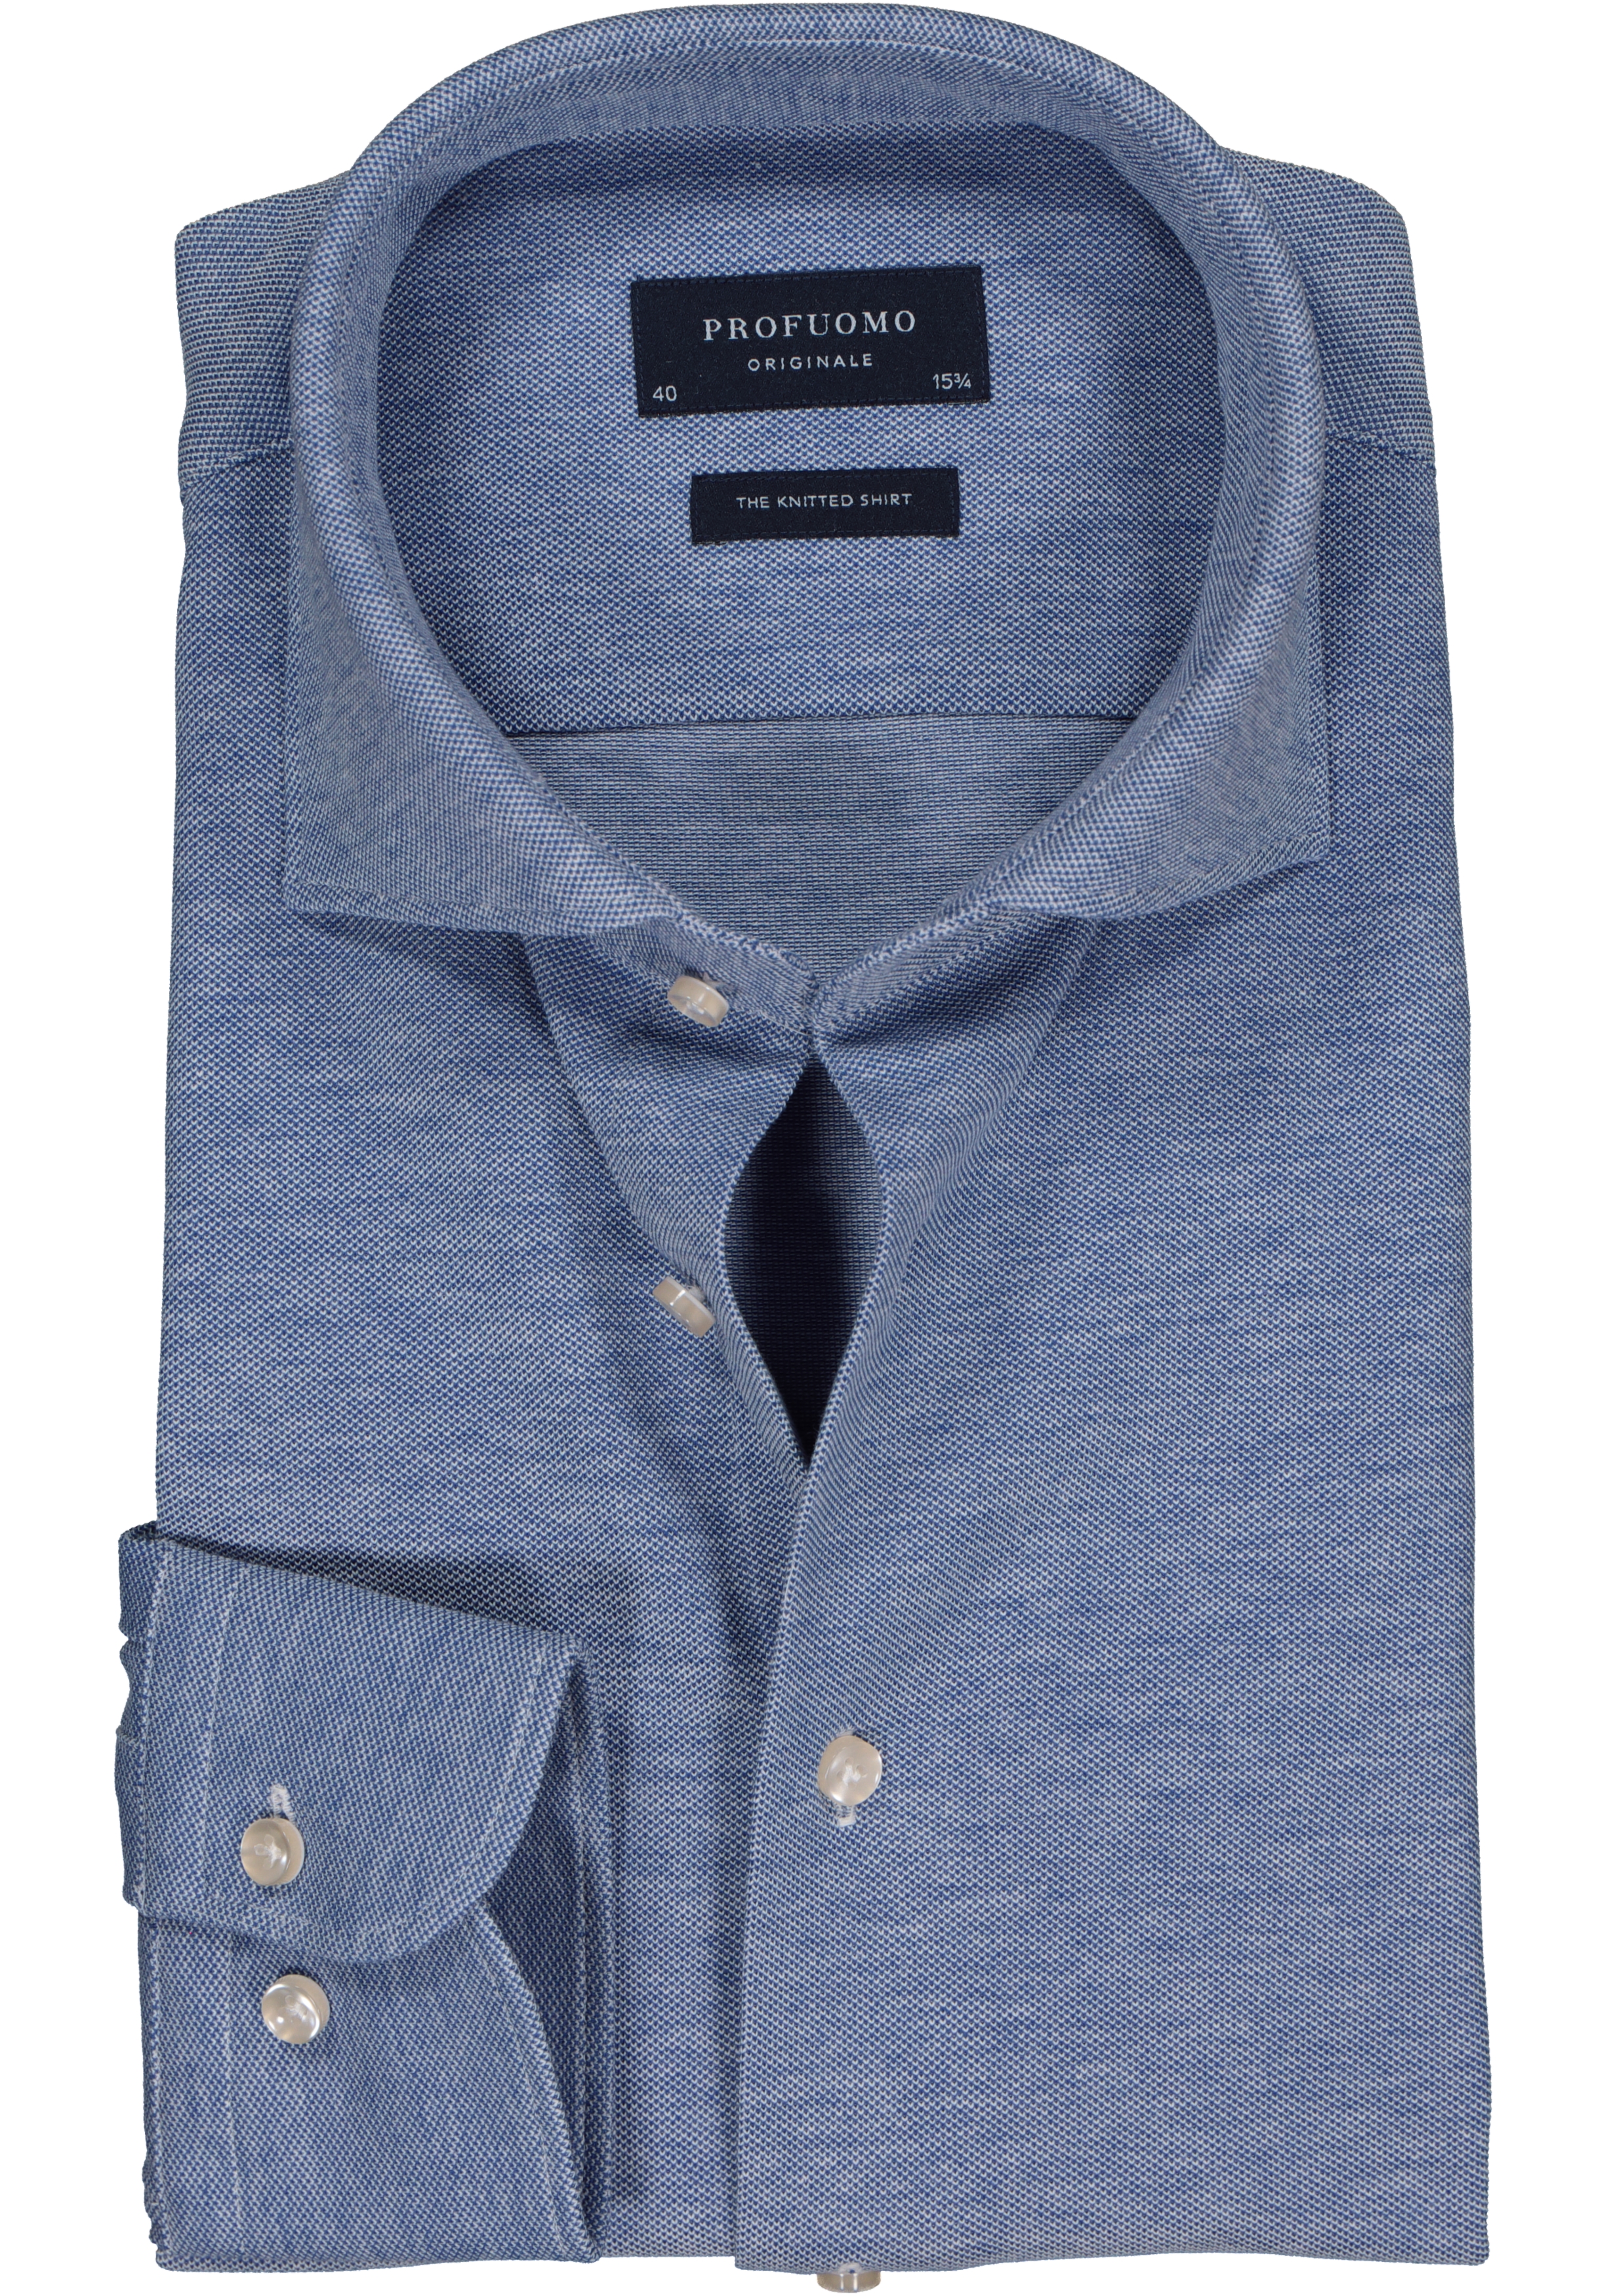 Profuomo Originale slim fit jersey overhemd, knitted shirt pique, blauw melange